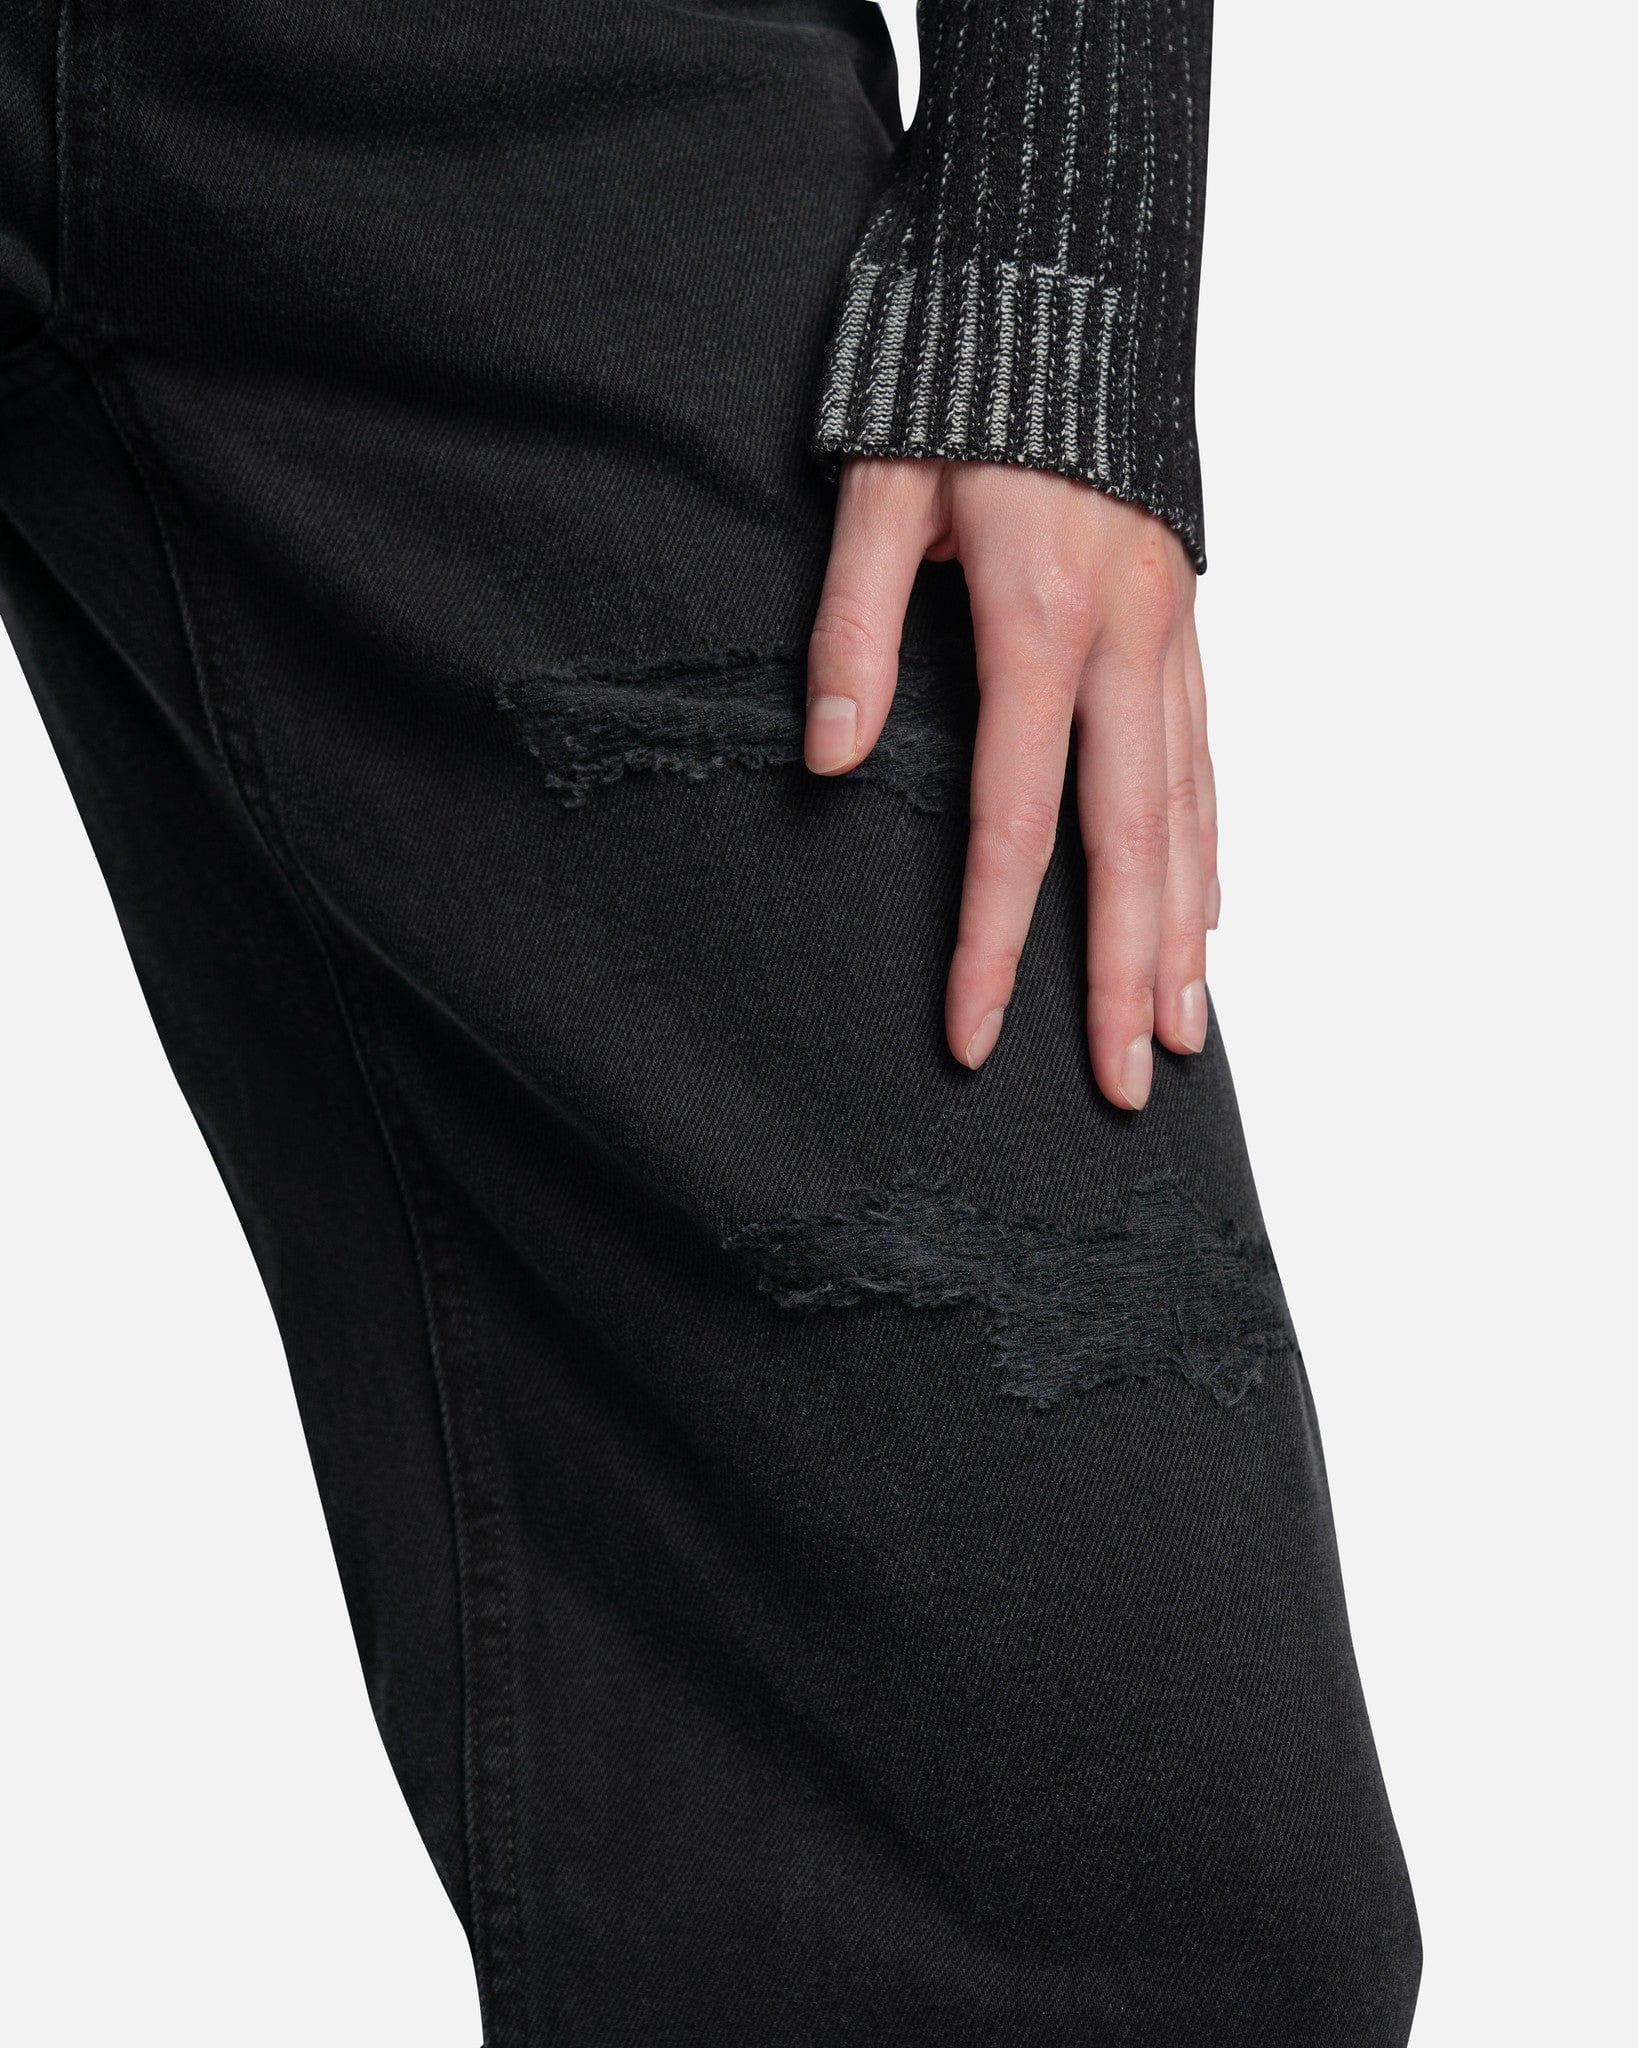 MM6 Maison Margiela Women Pants 5 Pocket Pants in Black